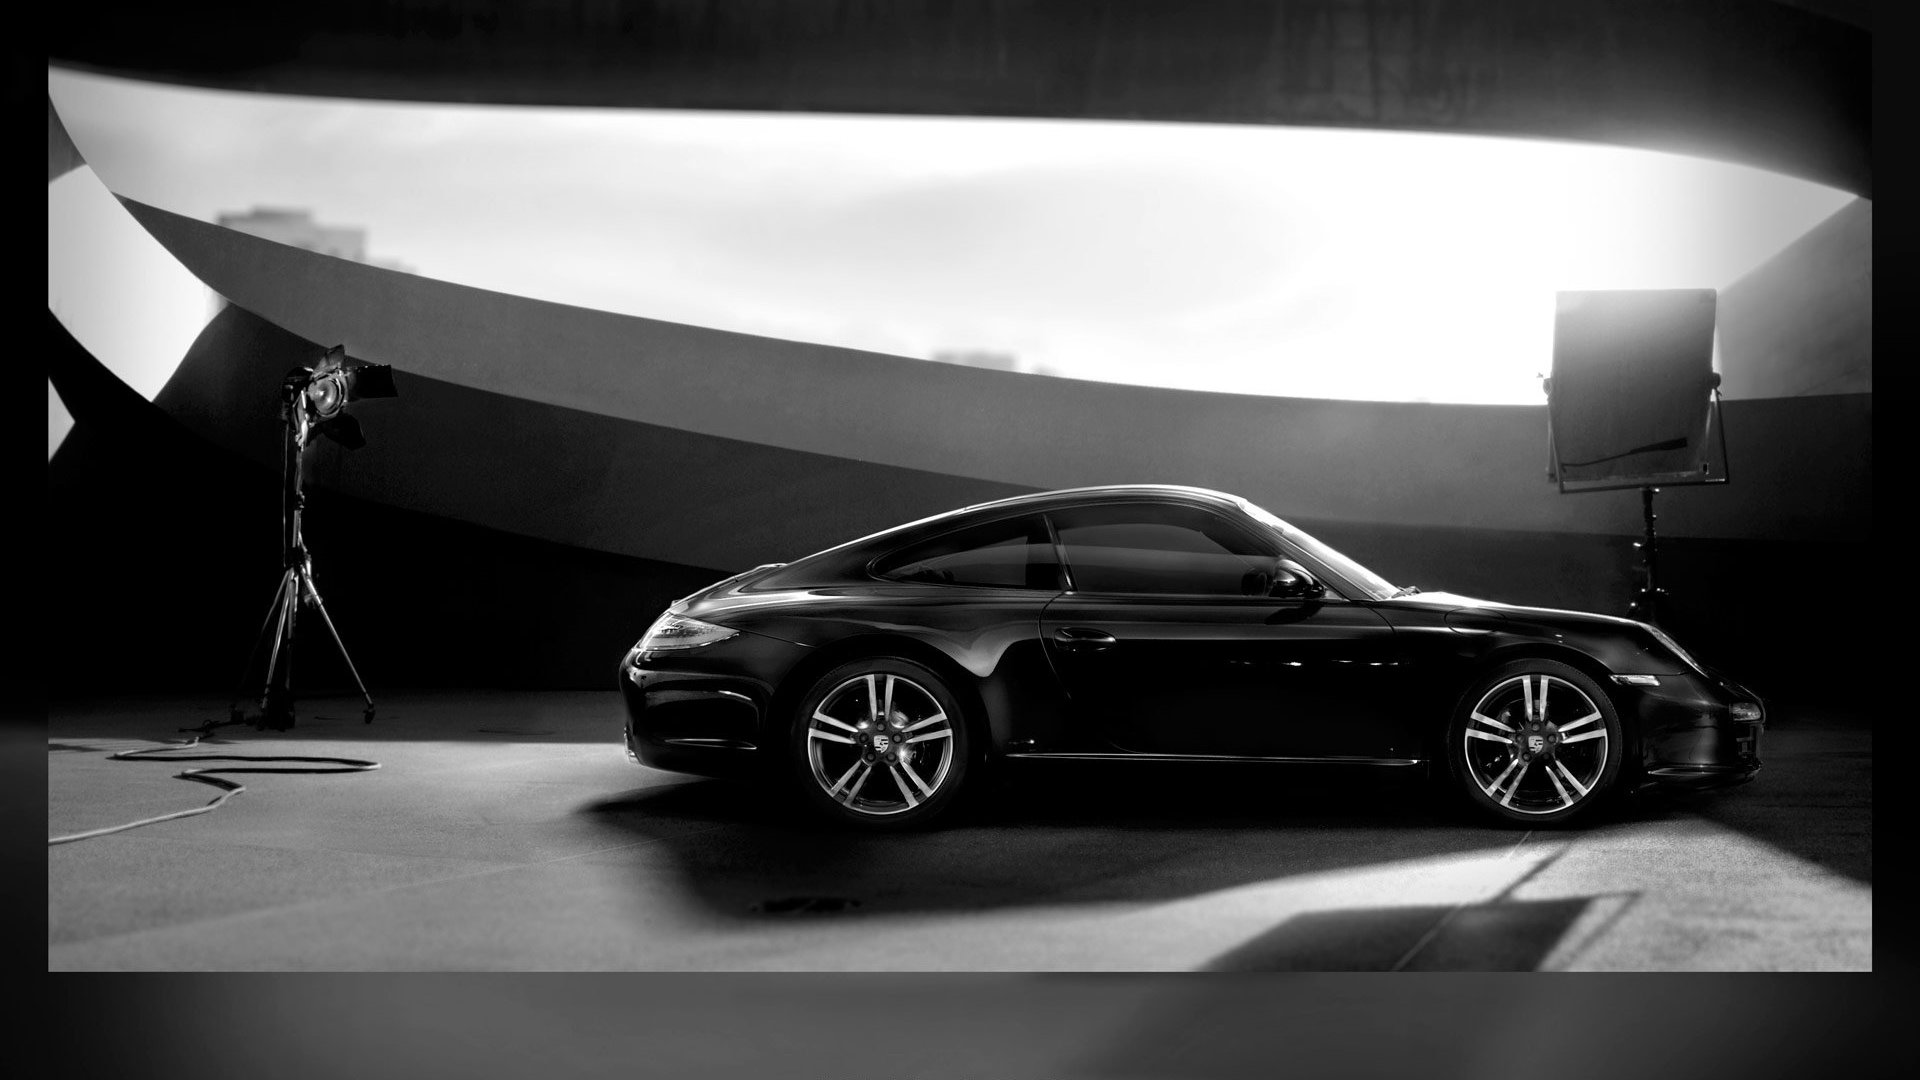 Porsche Black Edition photo contest winners